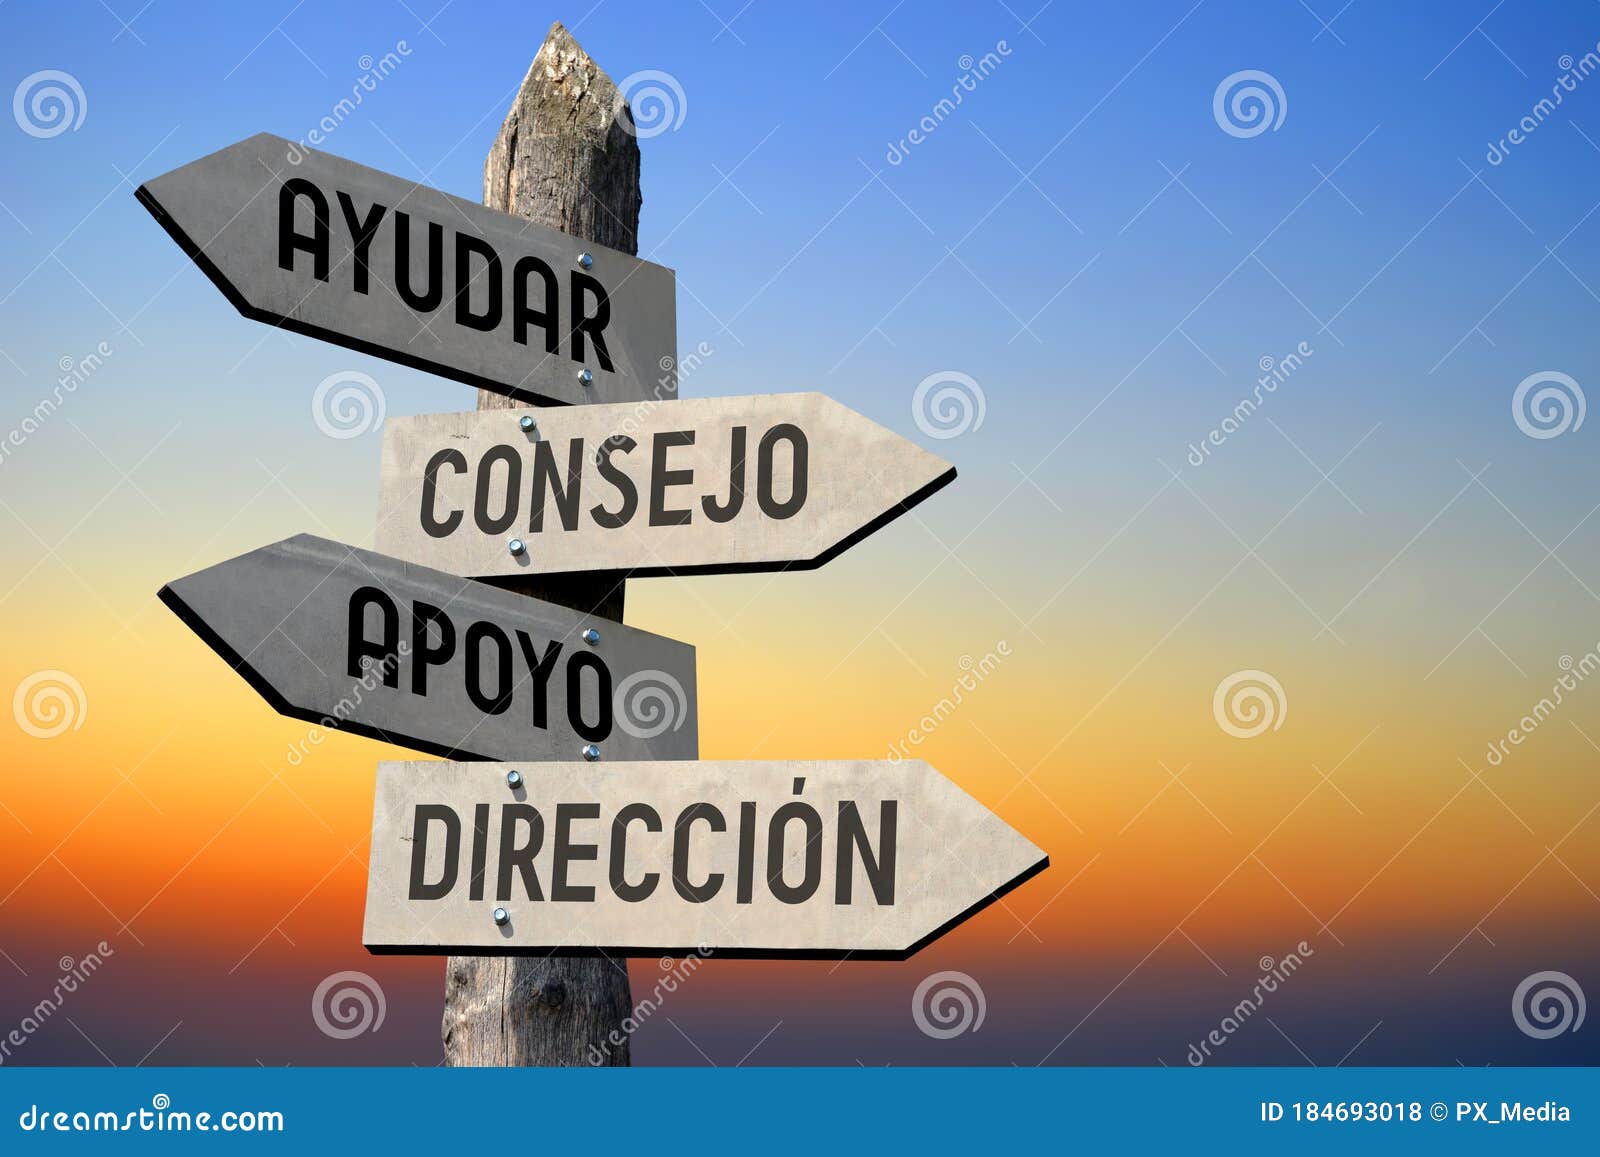 ayudar, consejo, apoyo, direccion - spanish/ help, advice, support, direction - english - wooden signpost, sunset sky